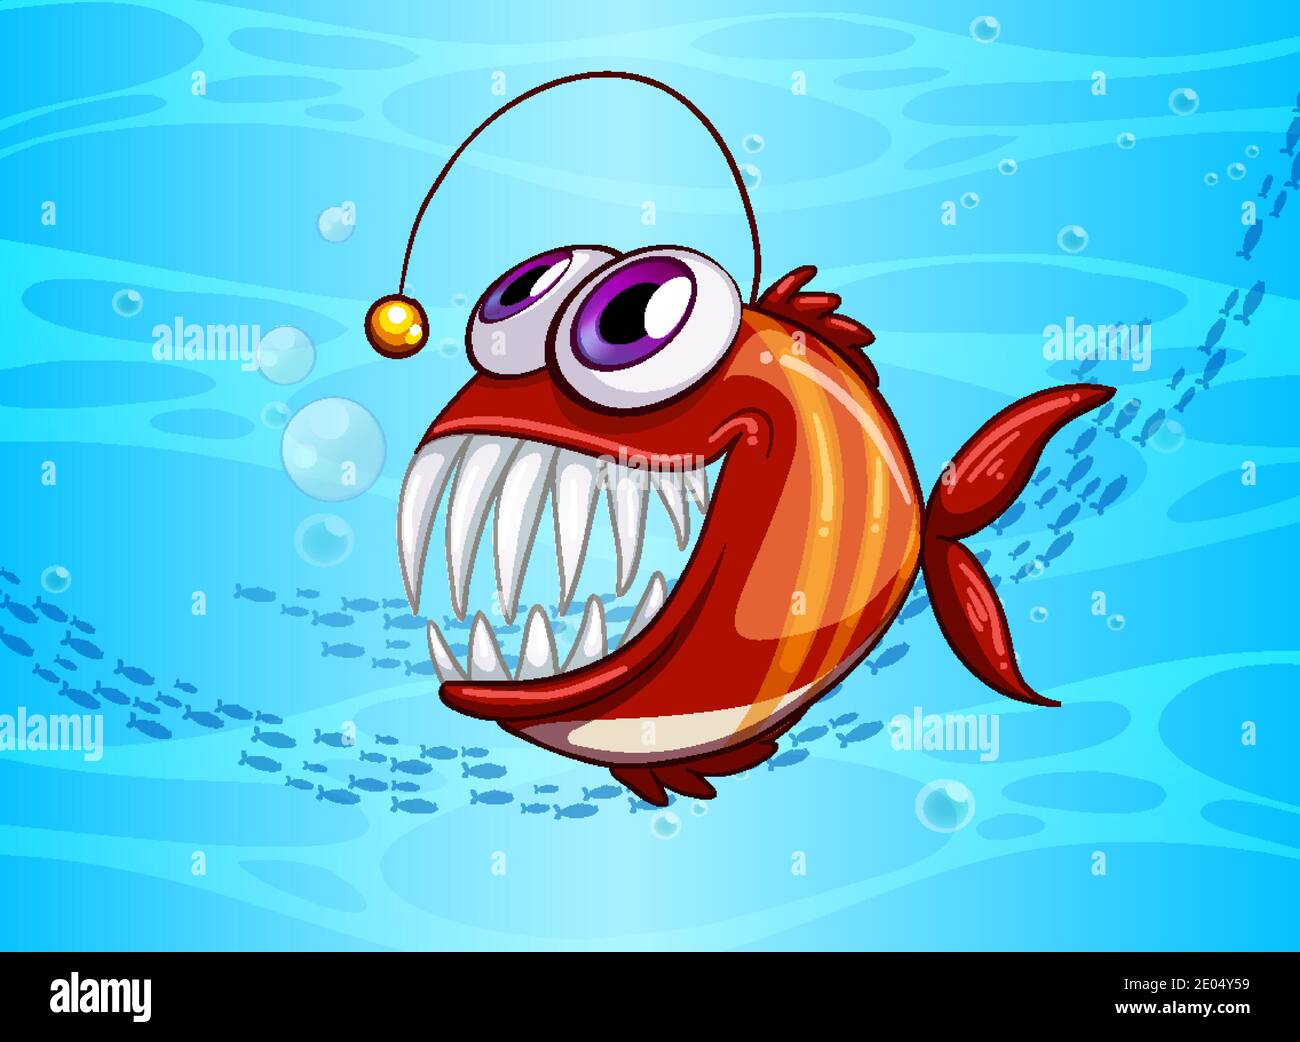 Angler fish cartoon character in the underwater scene illustration